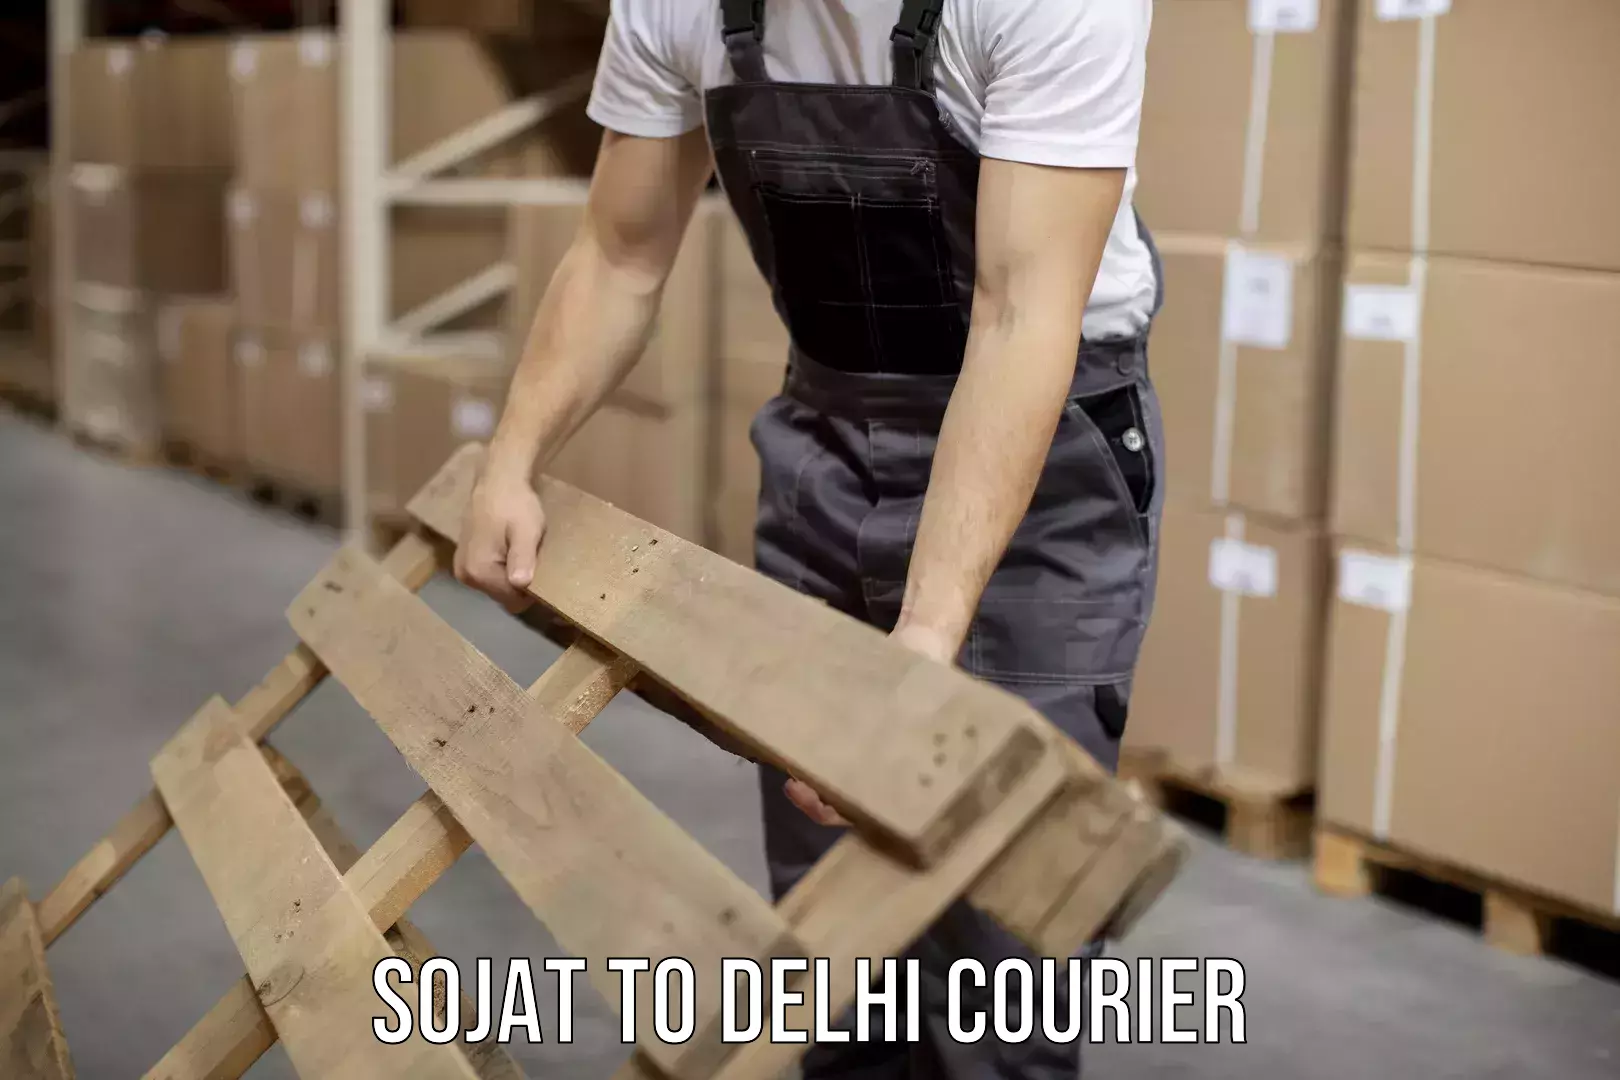 Courier service comparison Sojat to Burari